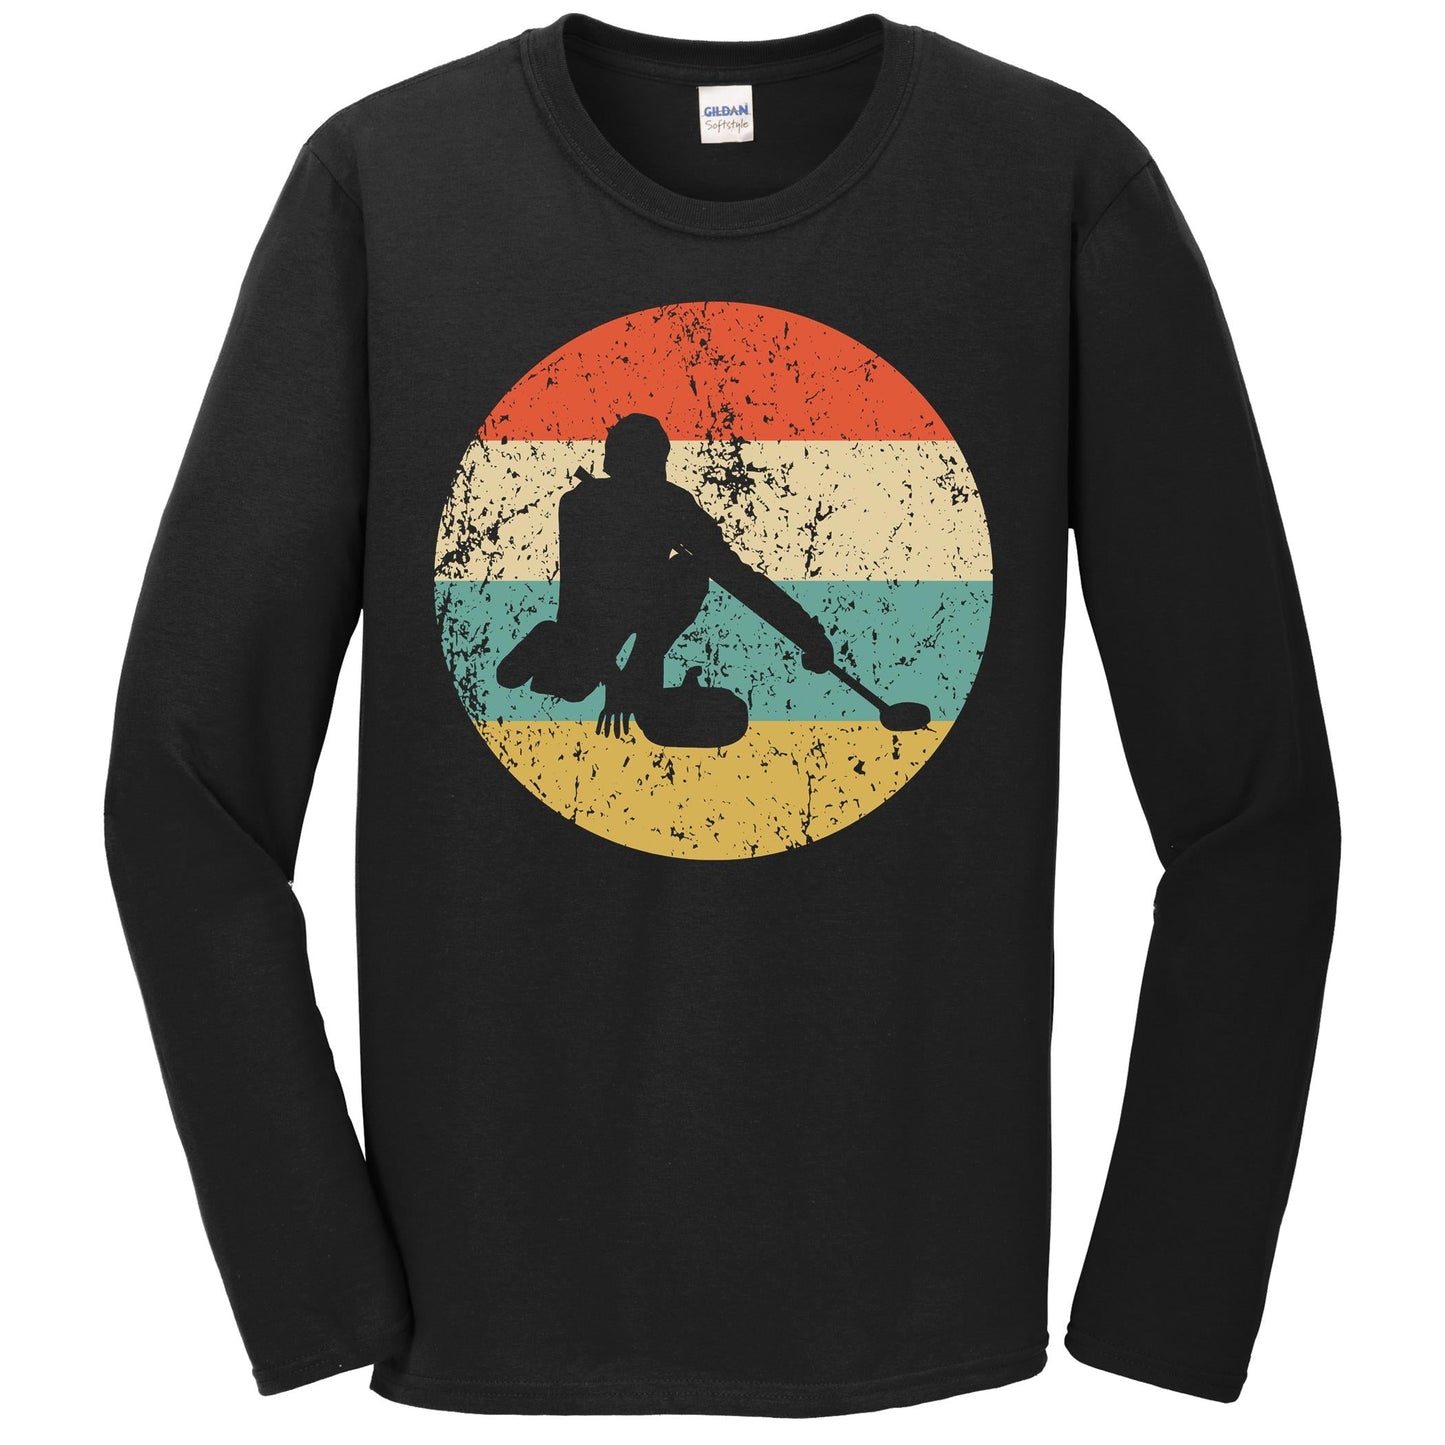 Curling Shirt - Vintage Retro Curler Long Sleeve T-Shirt